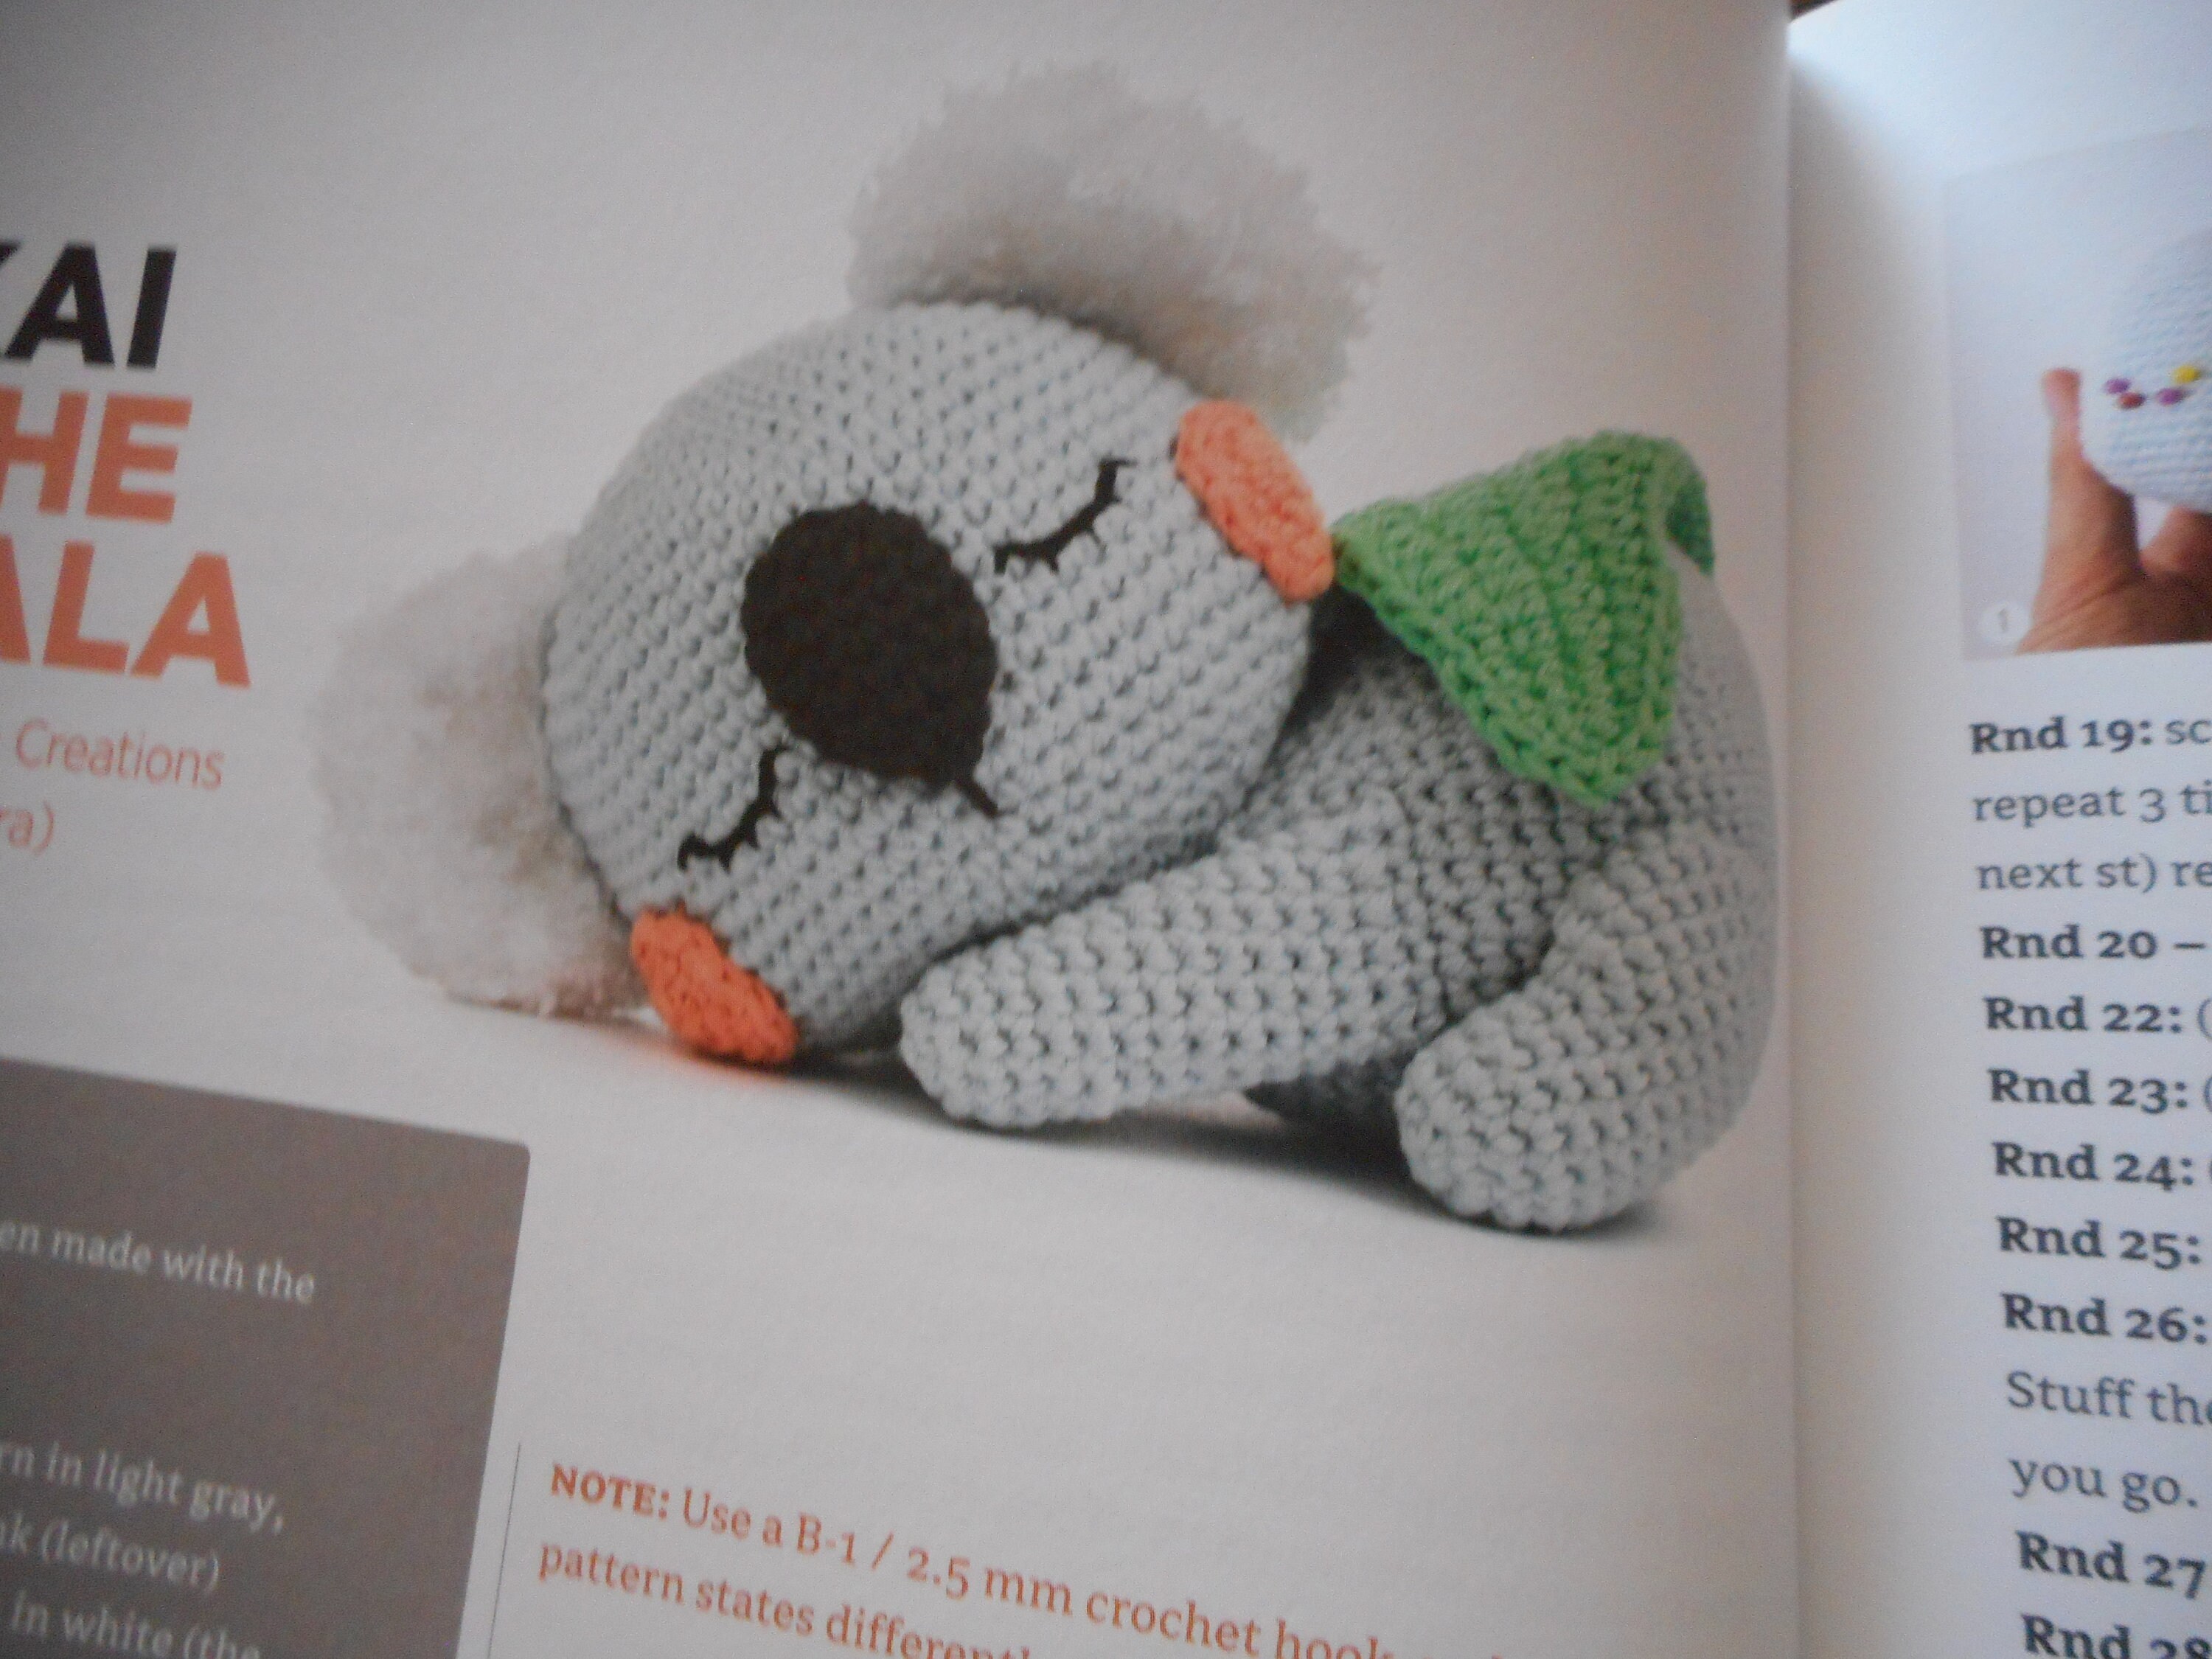 Zoomigurumi 10, Crochet Animal Amigurumi Pattern Book, Like New. 15 Great  Patterns From 12 Great Designers. 